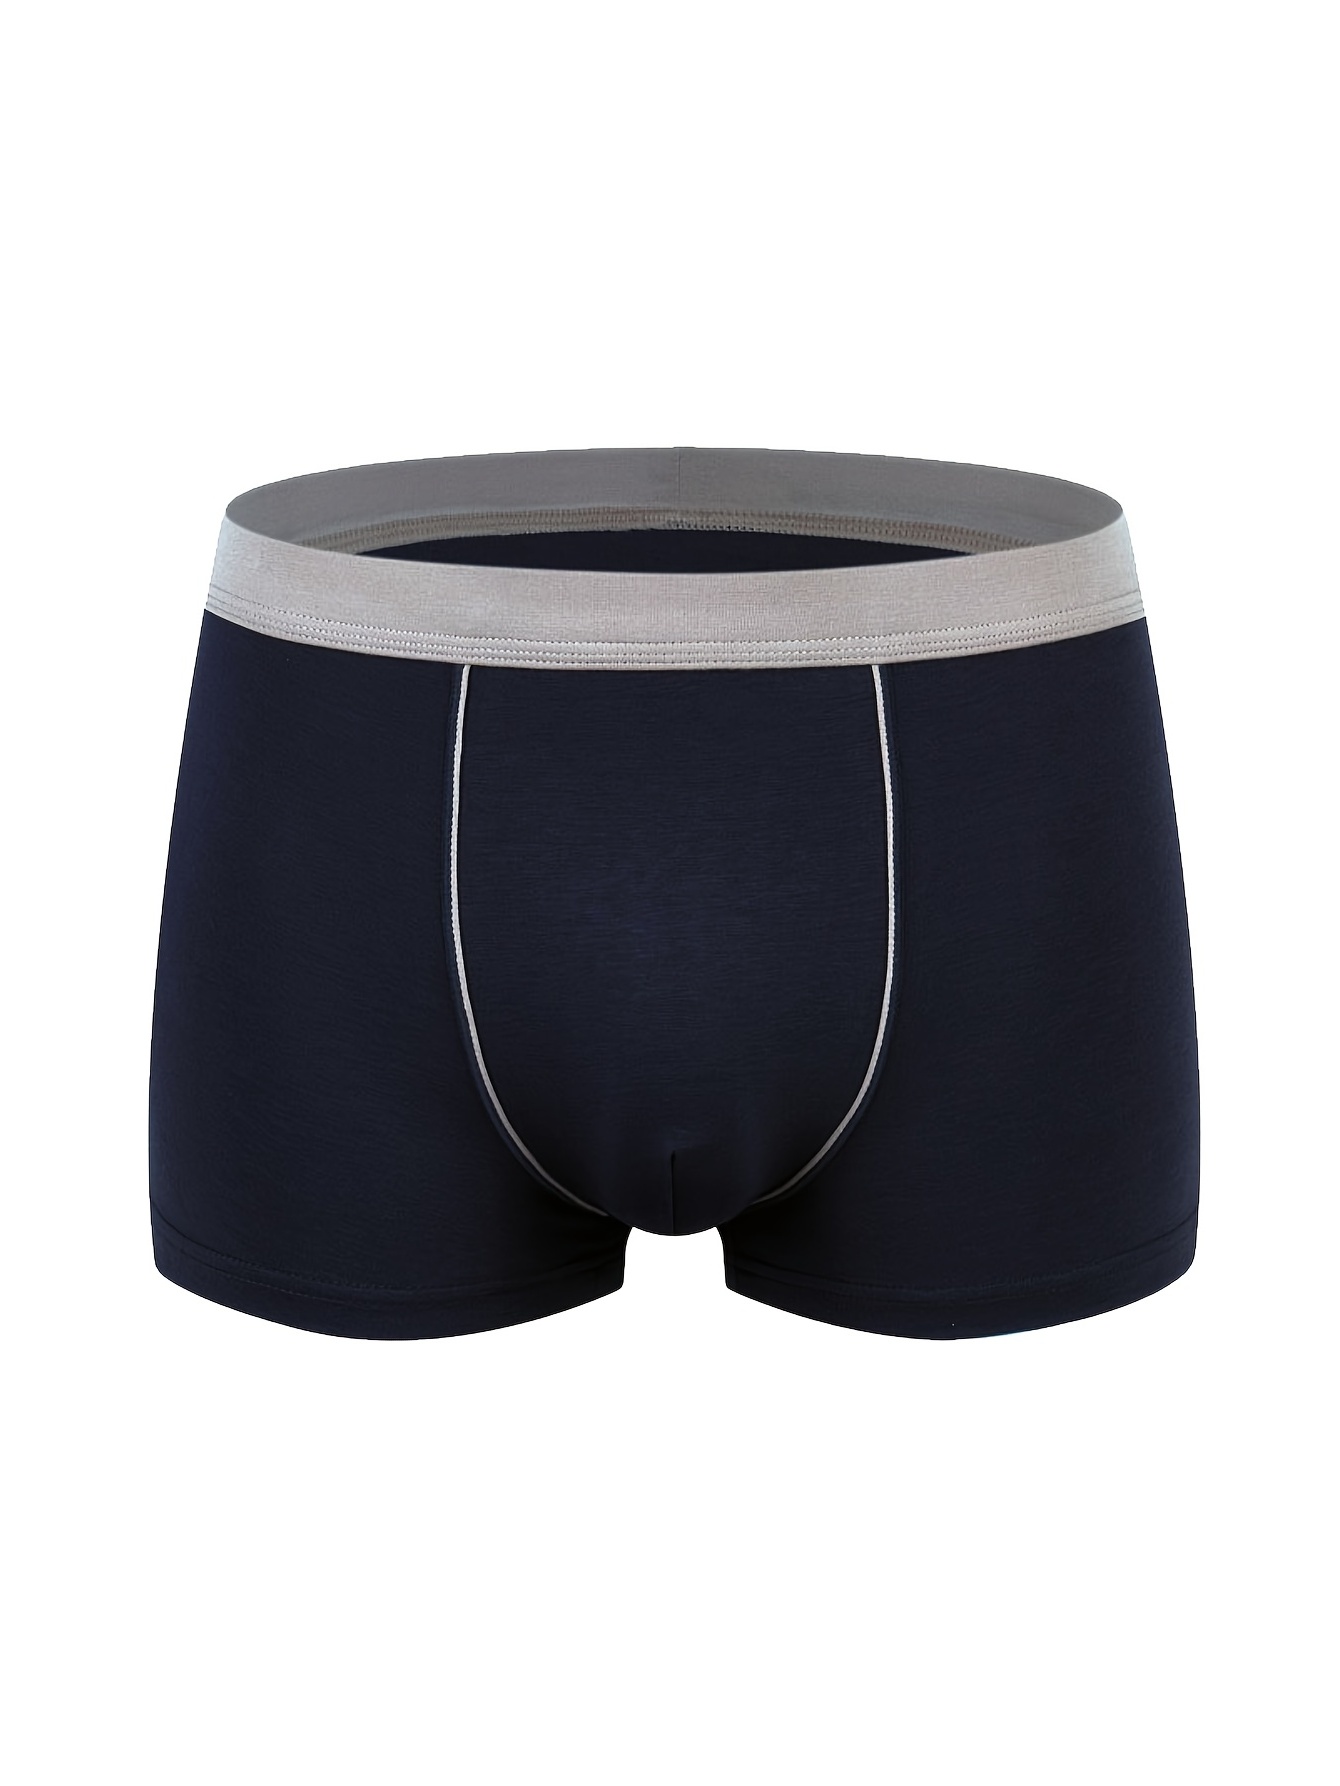 20 knots. men's plus size elastic cotton underwear briefs. article 934  available in white - blue - gray - black